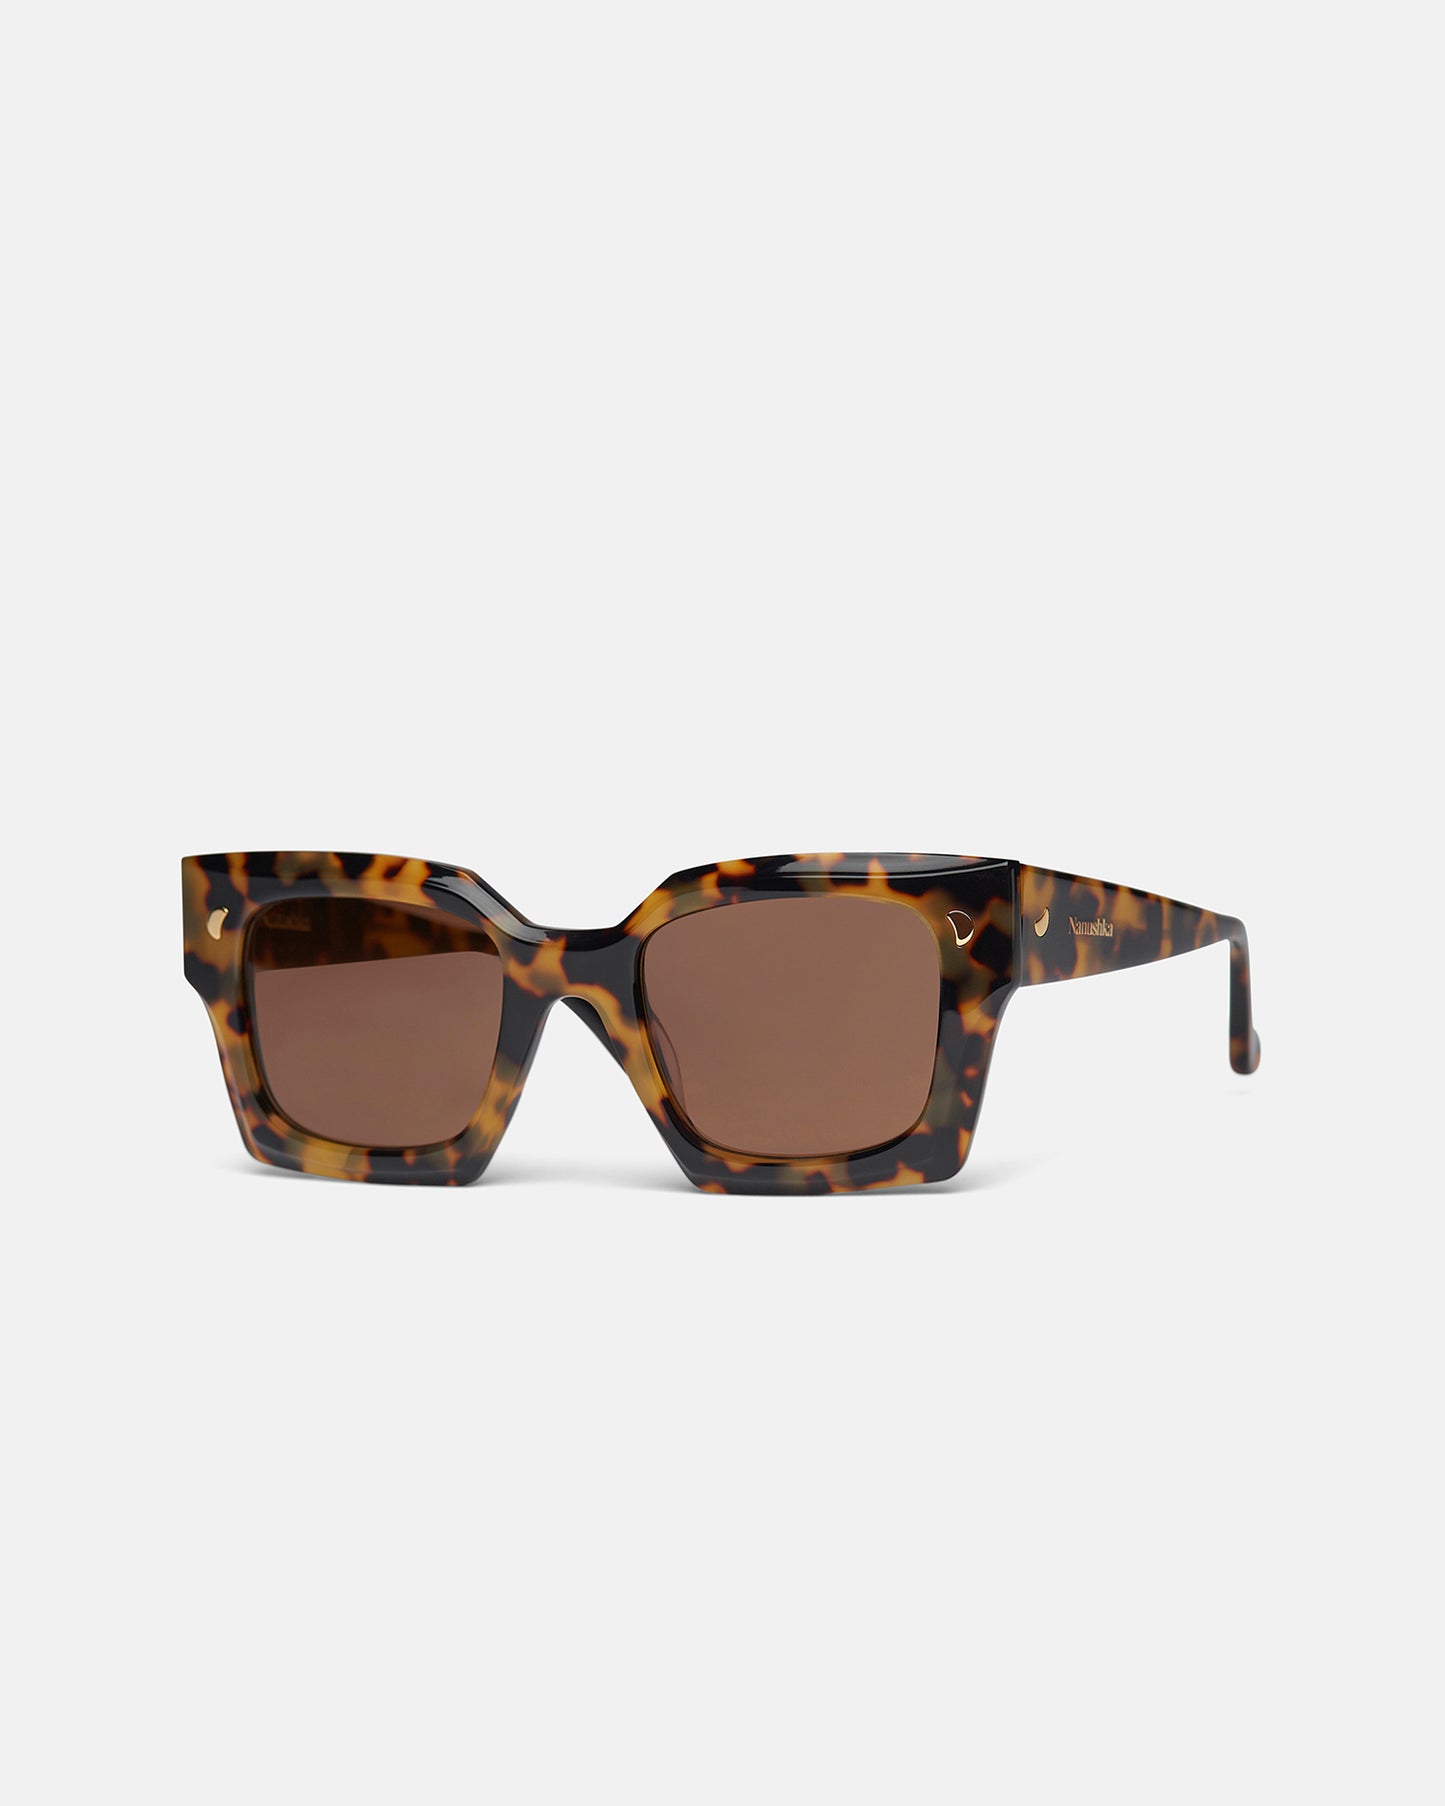 Cordia - Bio-Plastic Sunglasses - Dark Amber